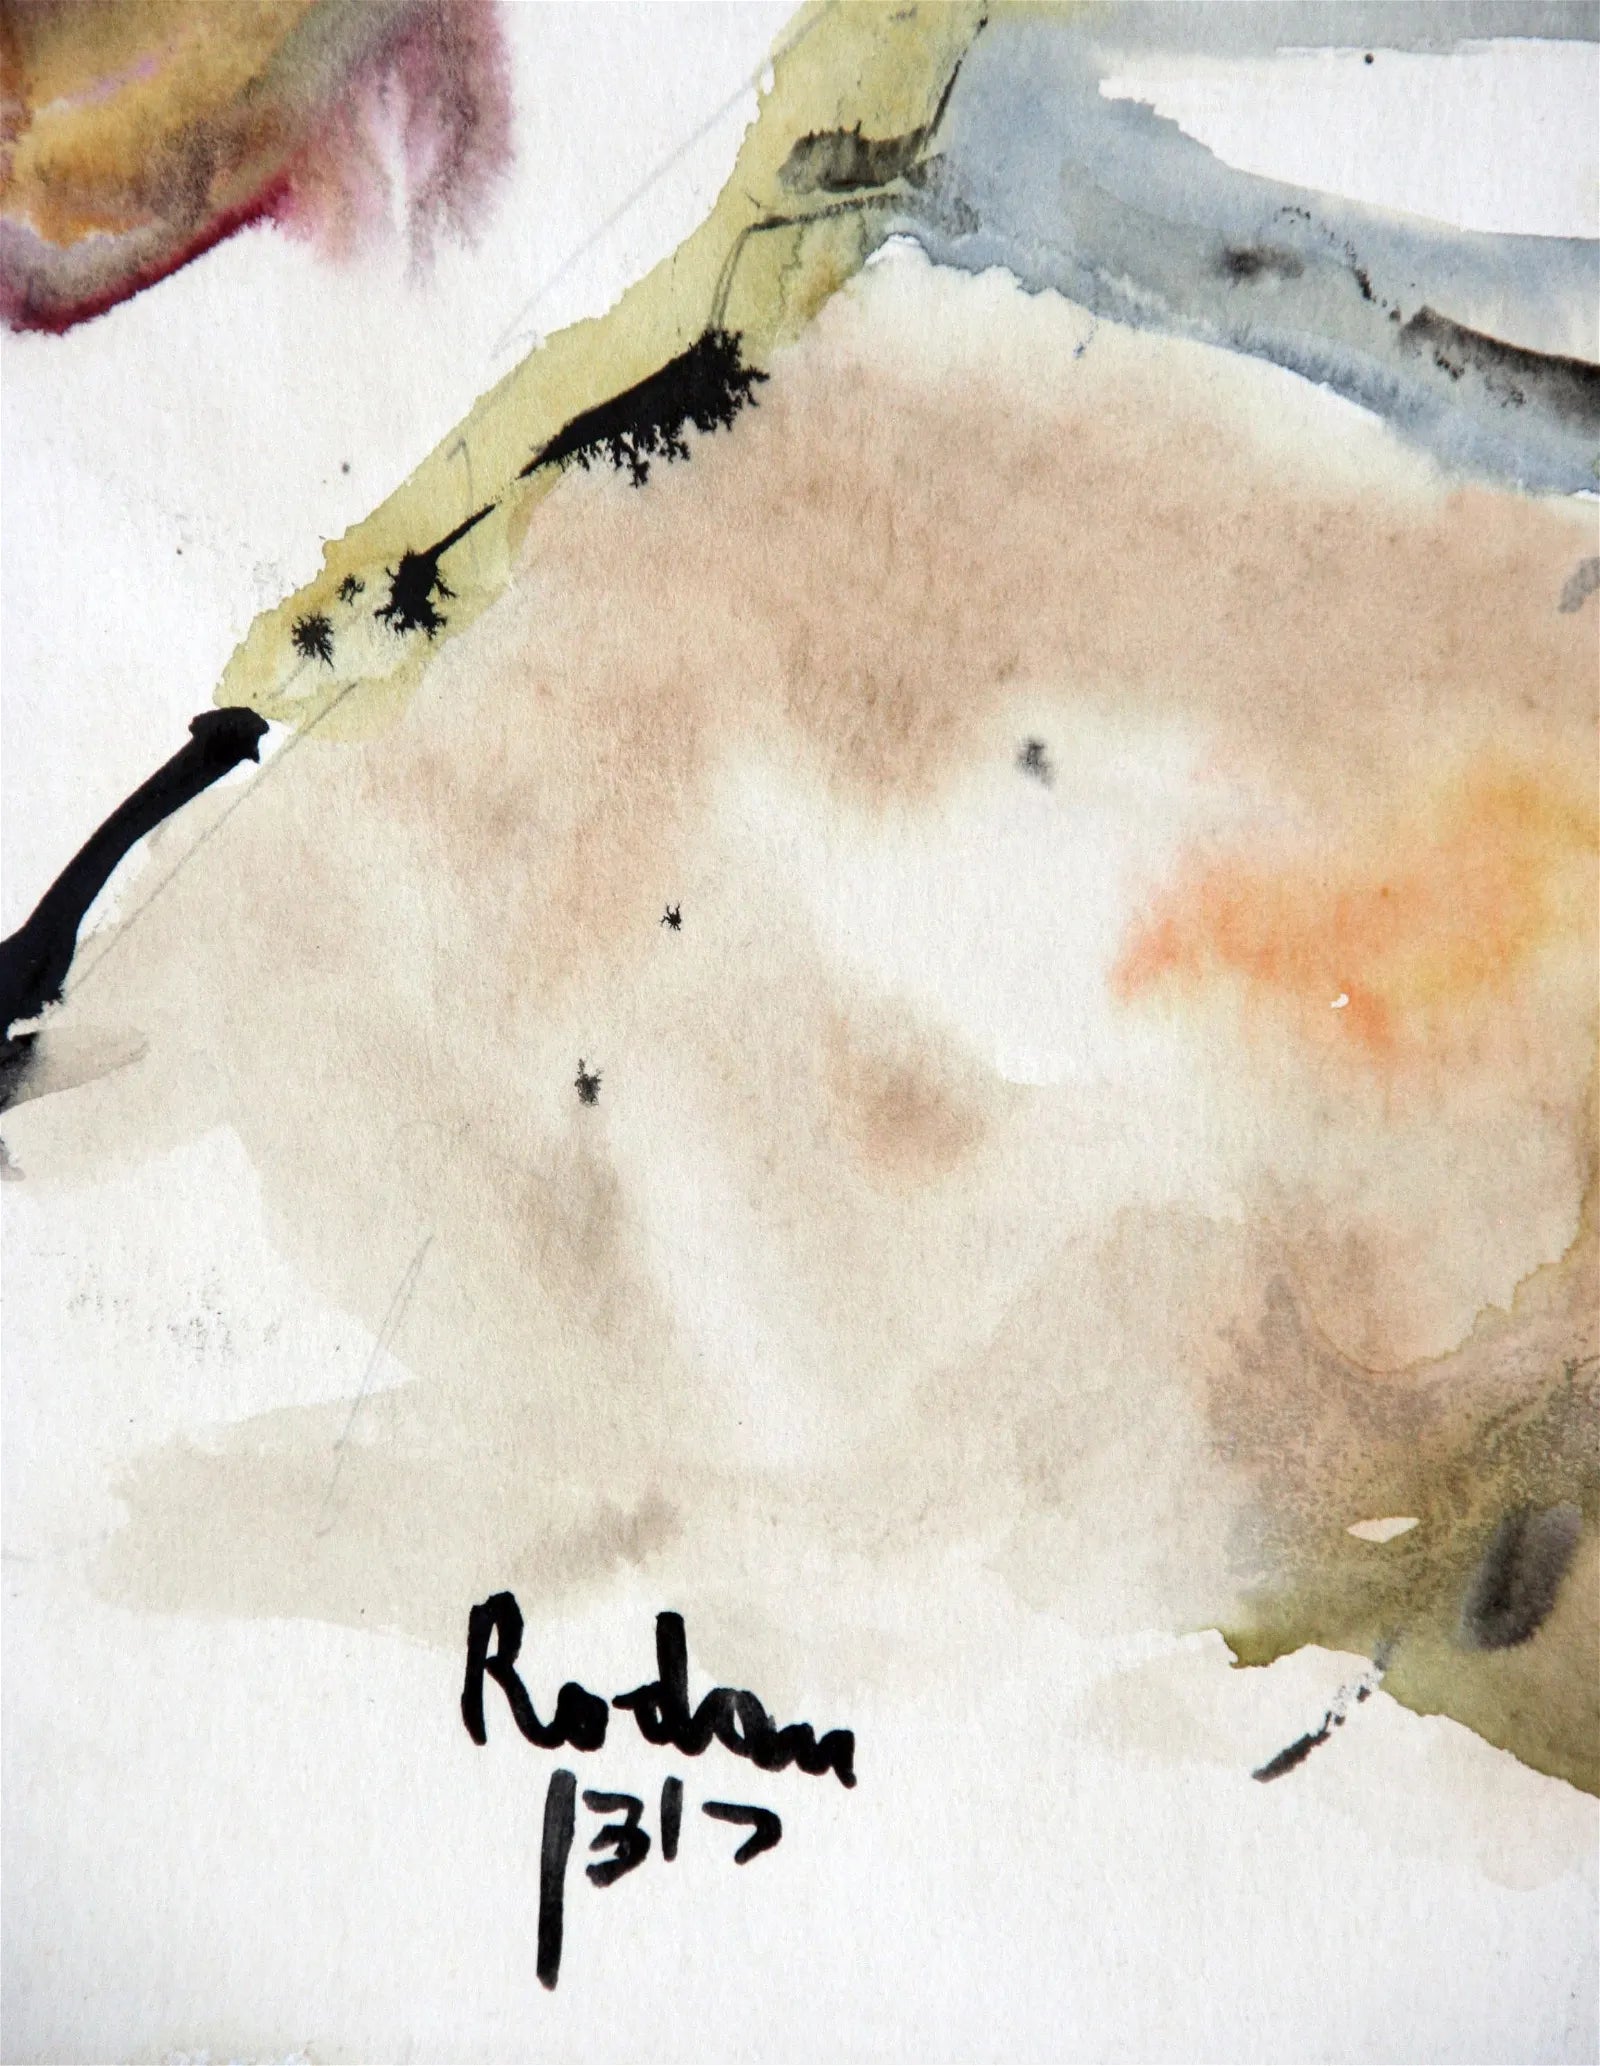 AW3-020: Jehuda Rodan - Watercolor on Paper - "Passage Way" - Late 20th Century